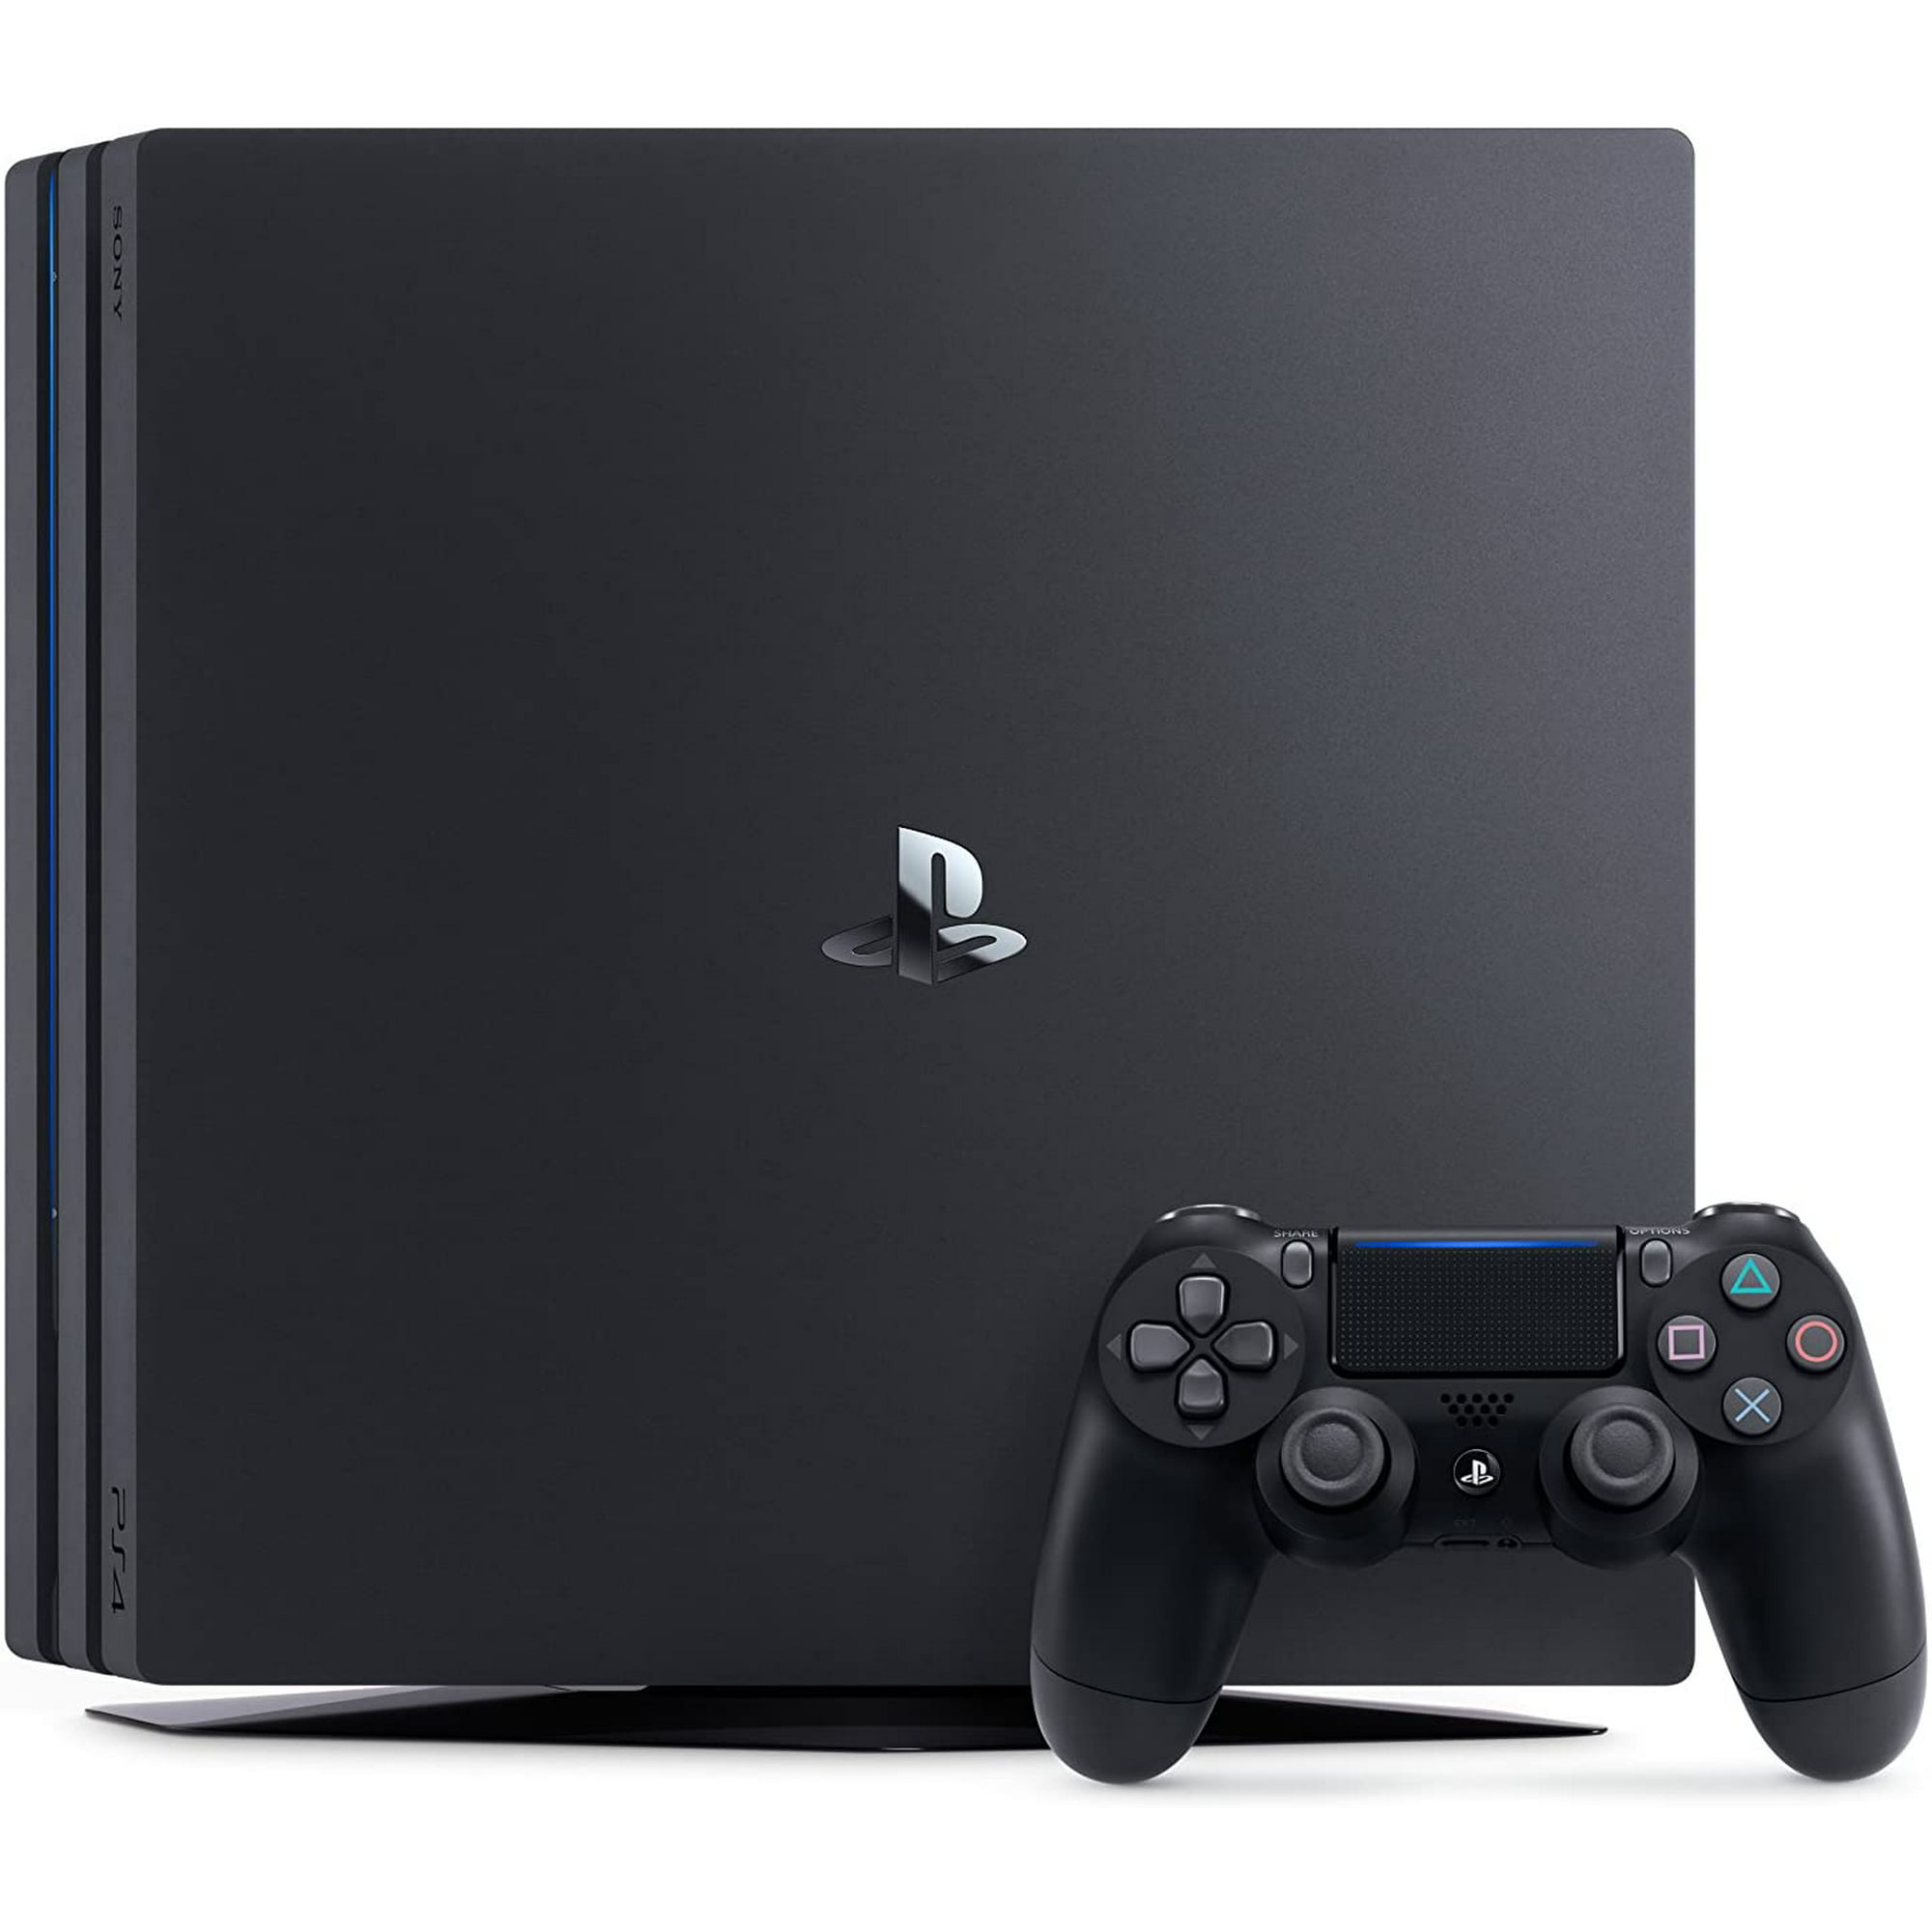 Sony PlayStation 4 Pro Console - Jet Black - 1TB [PlayStation 4